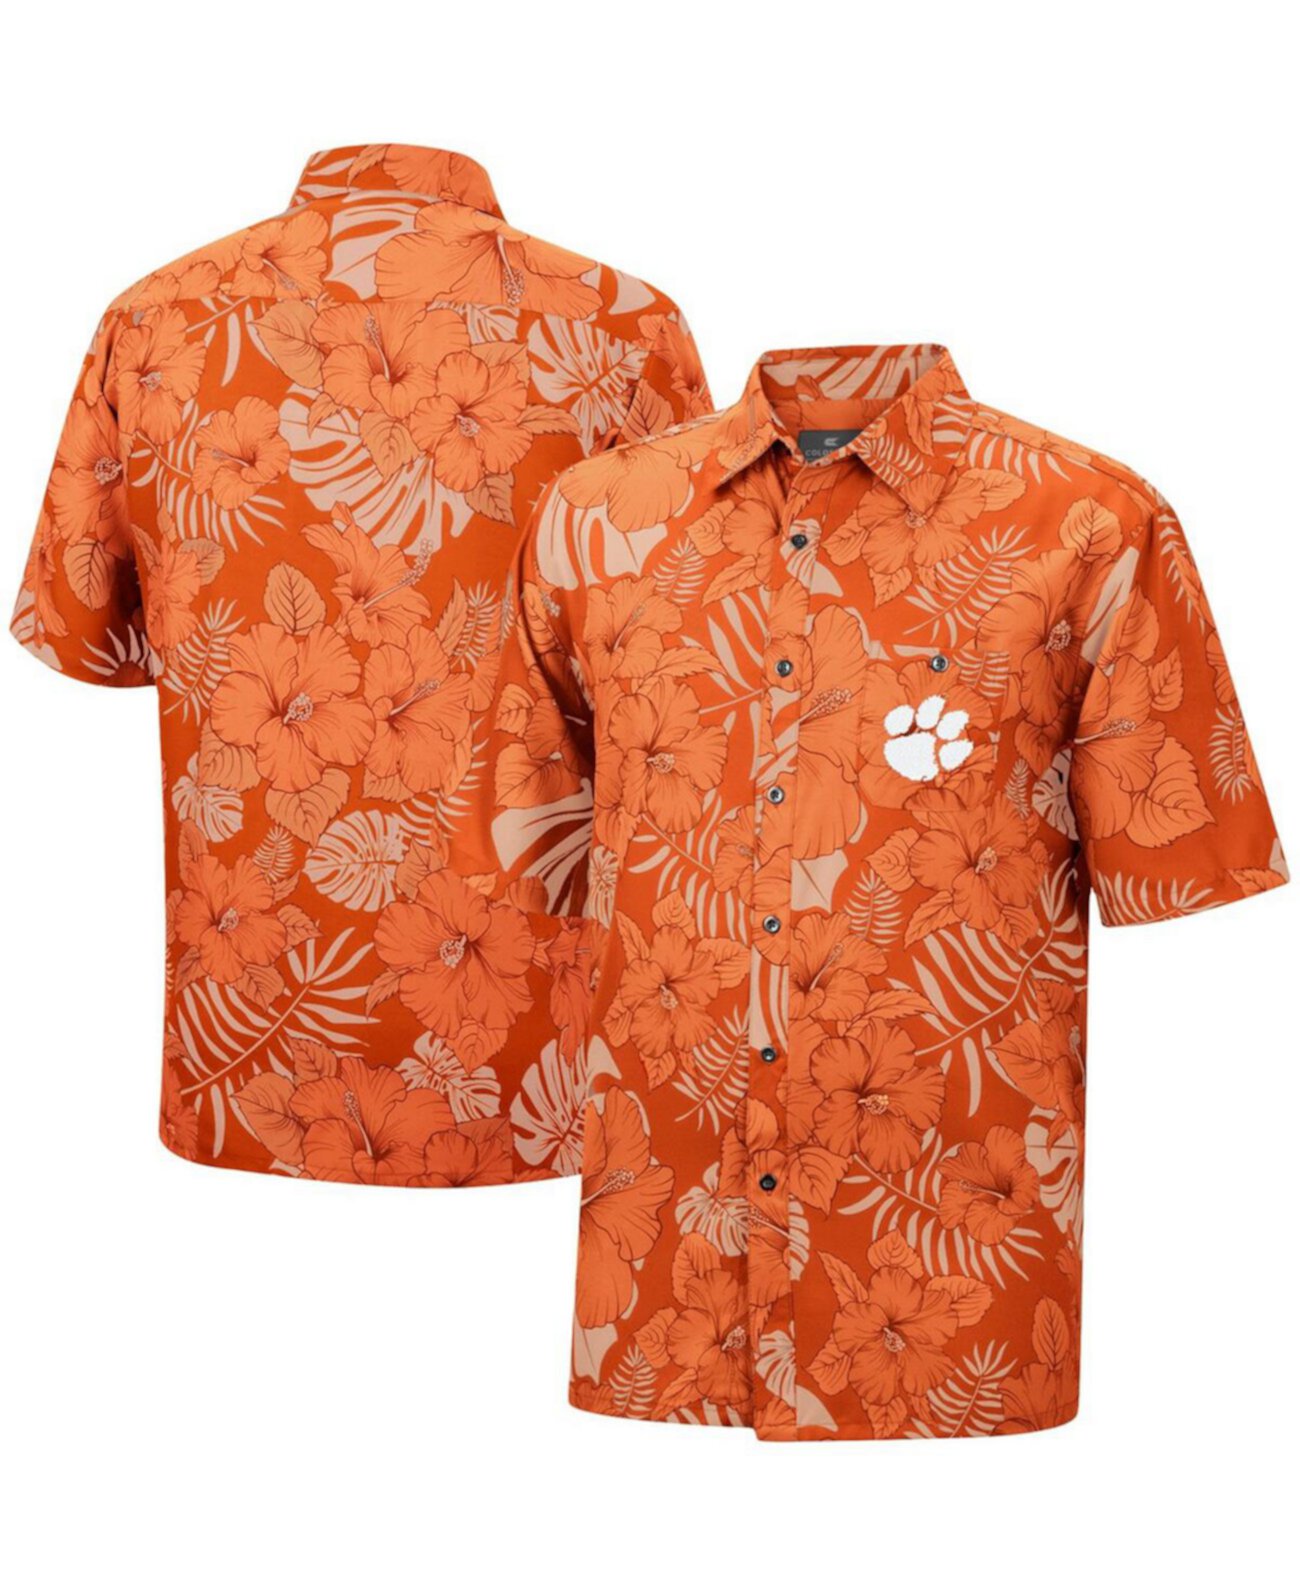 Мужская оранжевая рубашка на пуговицах Clemson Tigers The Dude Camp Colosseum